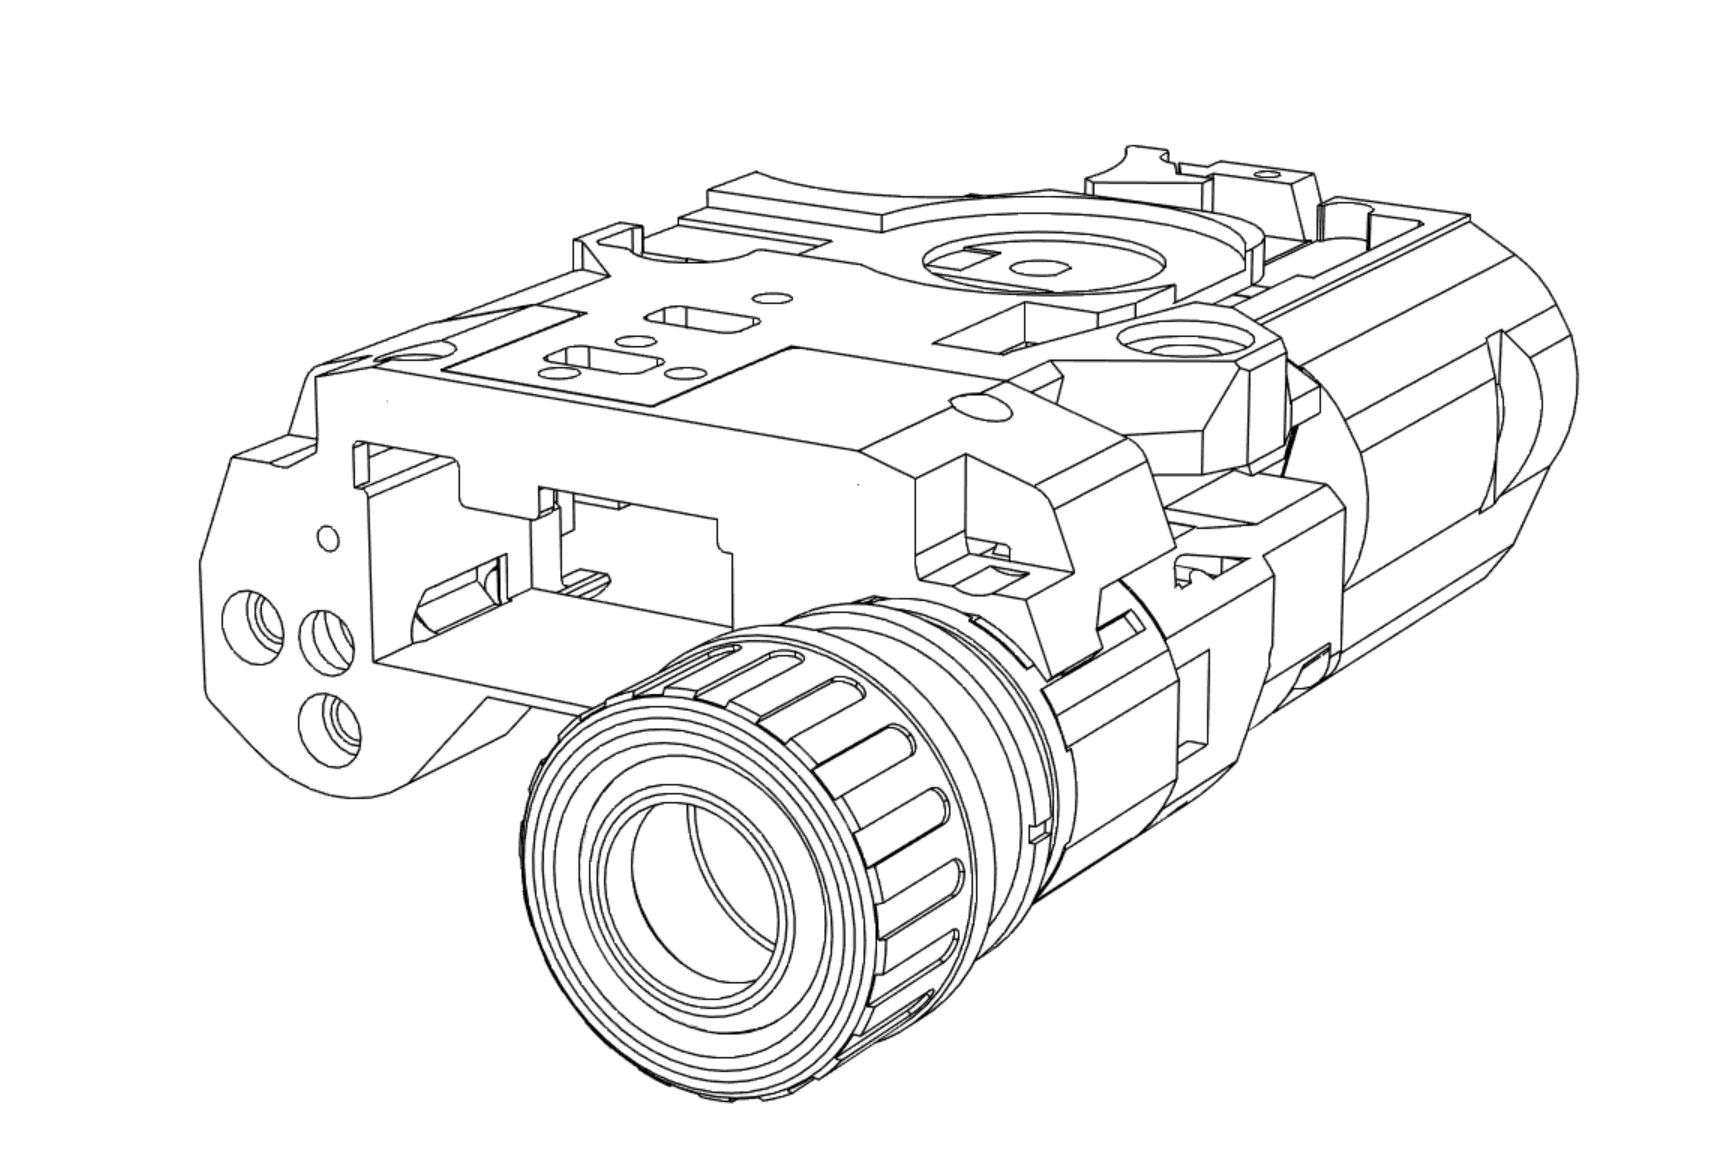 PEQ15型ガンカメラ(FMA/Runcam2) 製作概要とパーツリスト – DAG kfz222